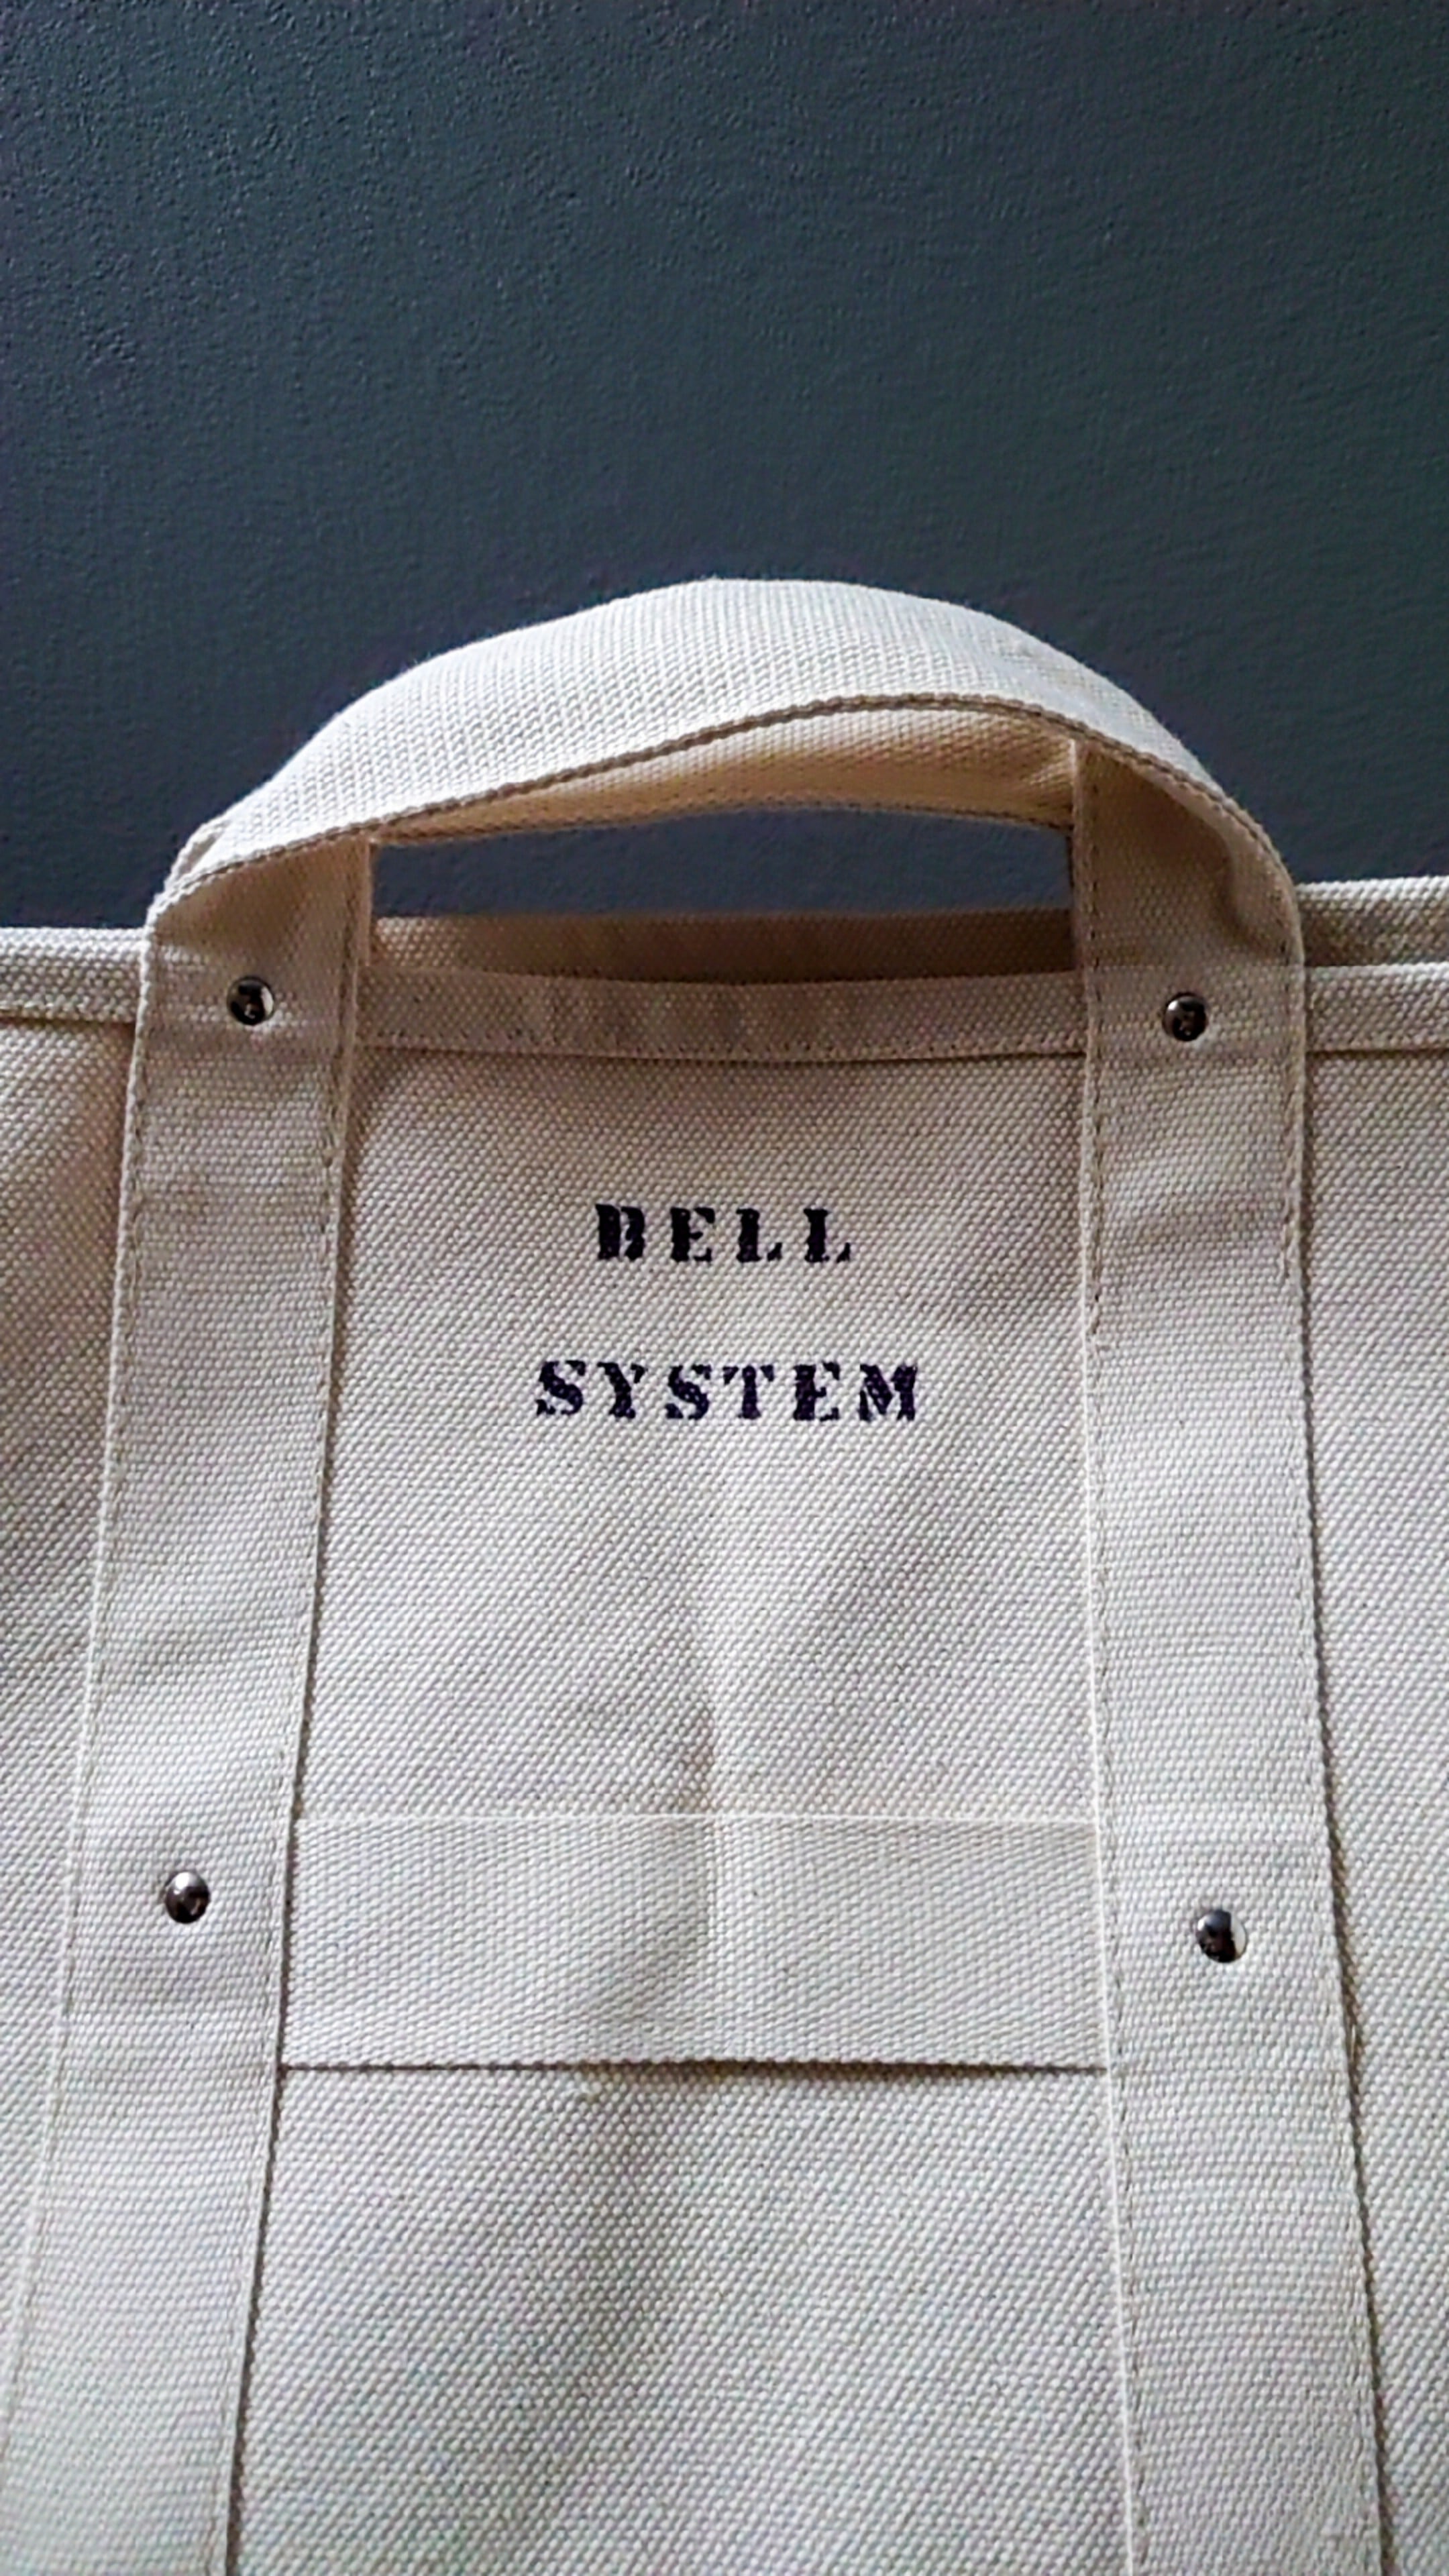 DEADSTOCK / 1970s】BELL SYSTEM社 ベルシステム社 キャンバス ツール ...